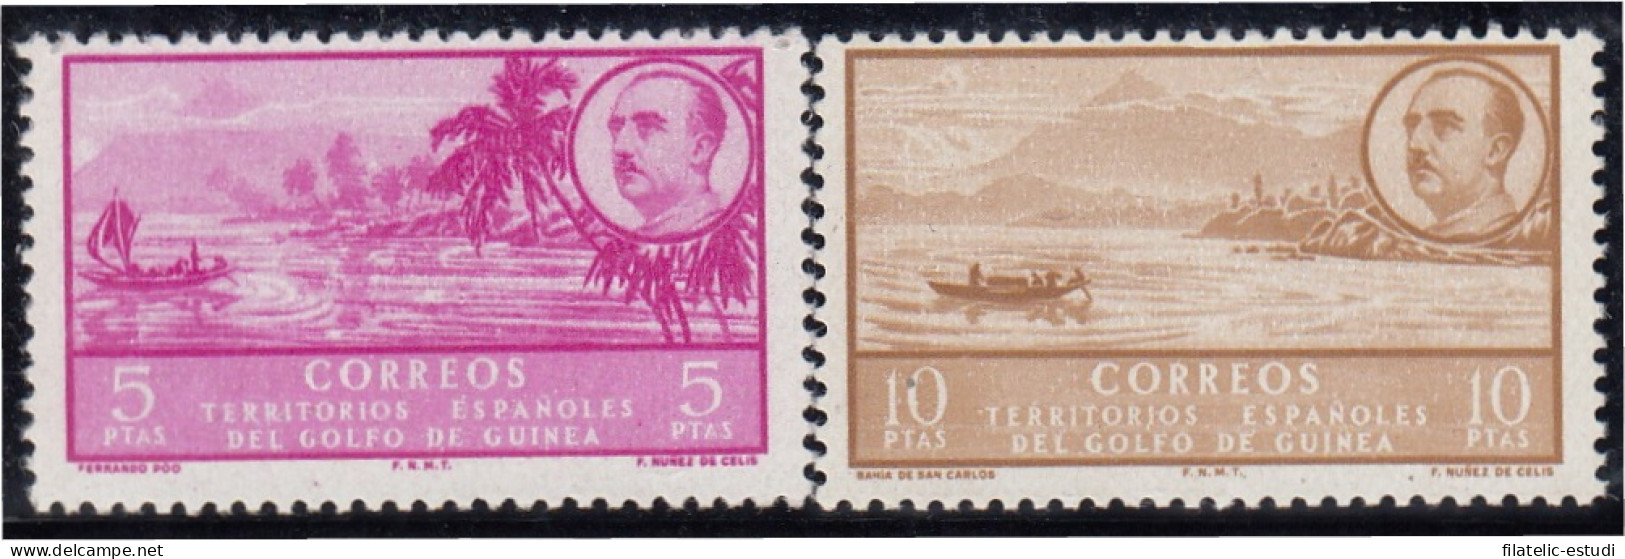 Guinea Española 291/92 1949/50 ( 277/93) Paisajes Franco MNH - Guinea Espagnole